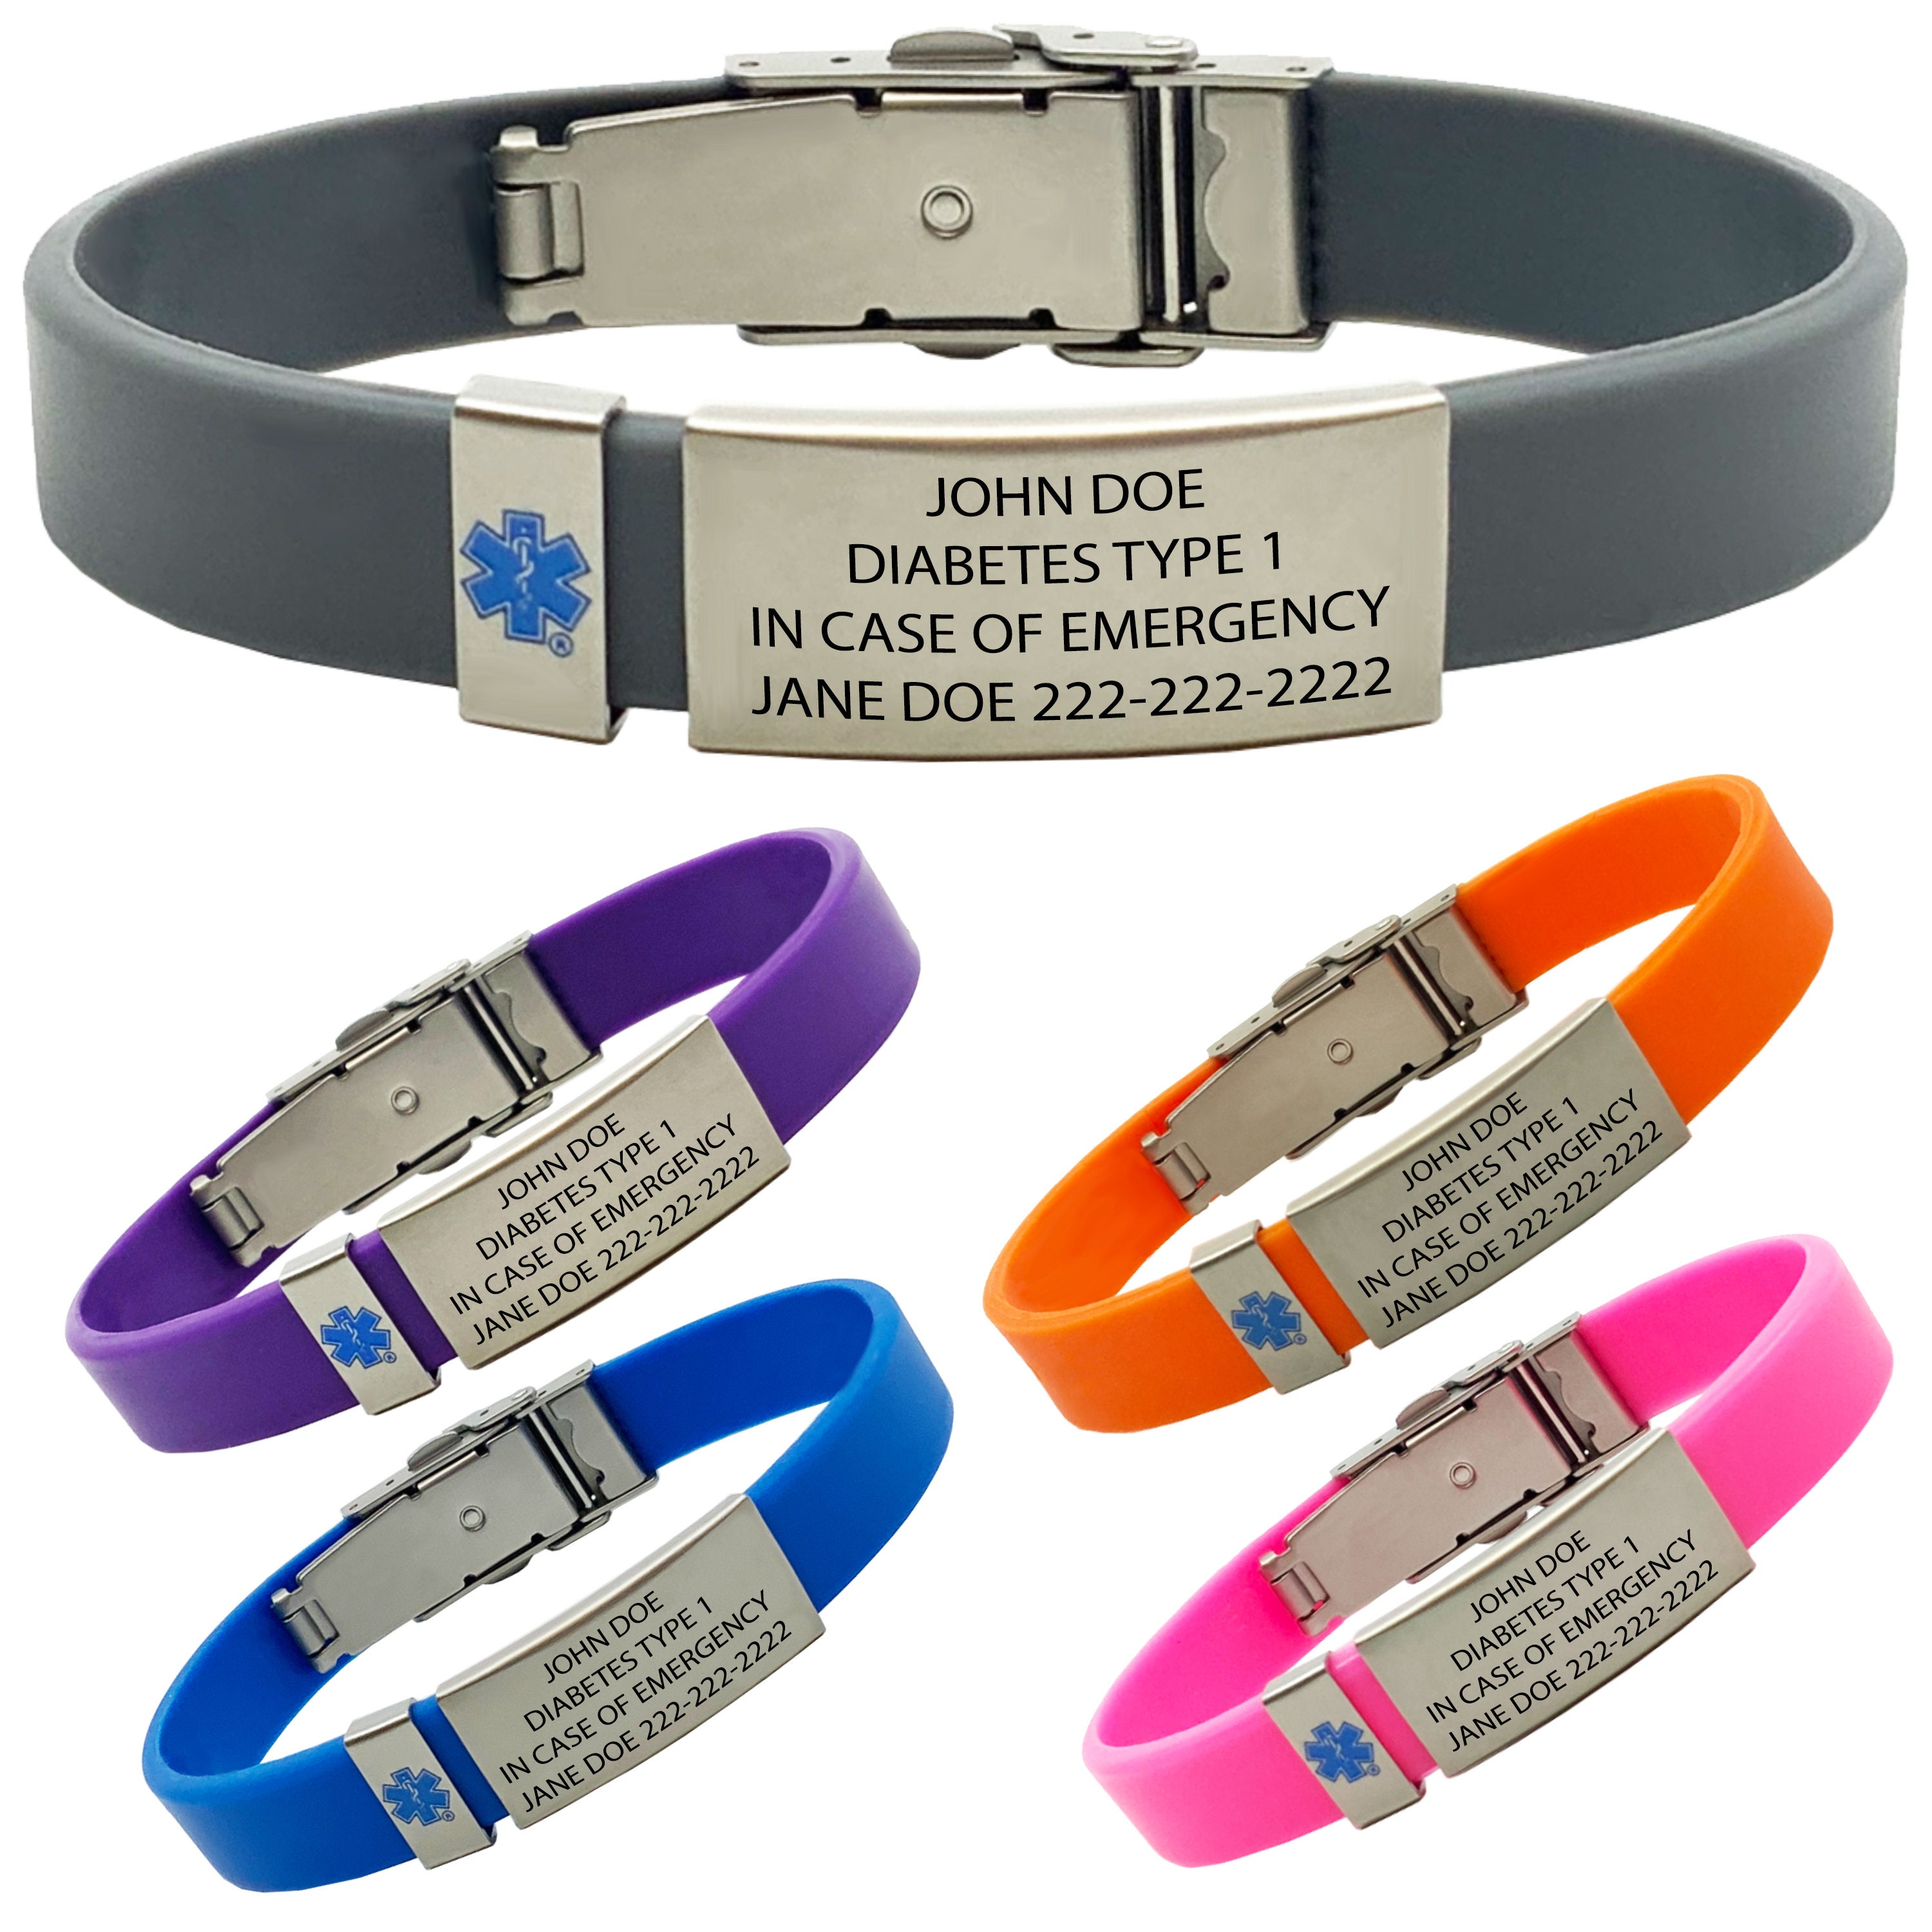 DIABETIC Medical Alert ID Bracelet -USA made, FREE ID Wallet Card,Engraving